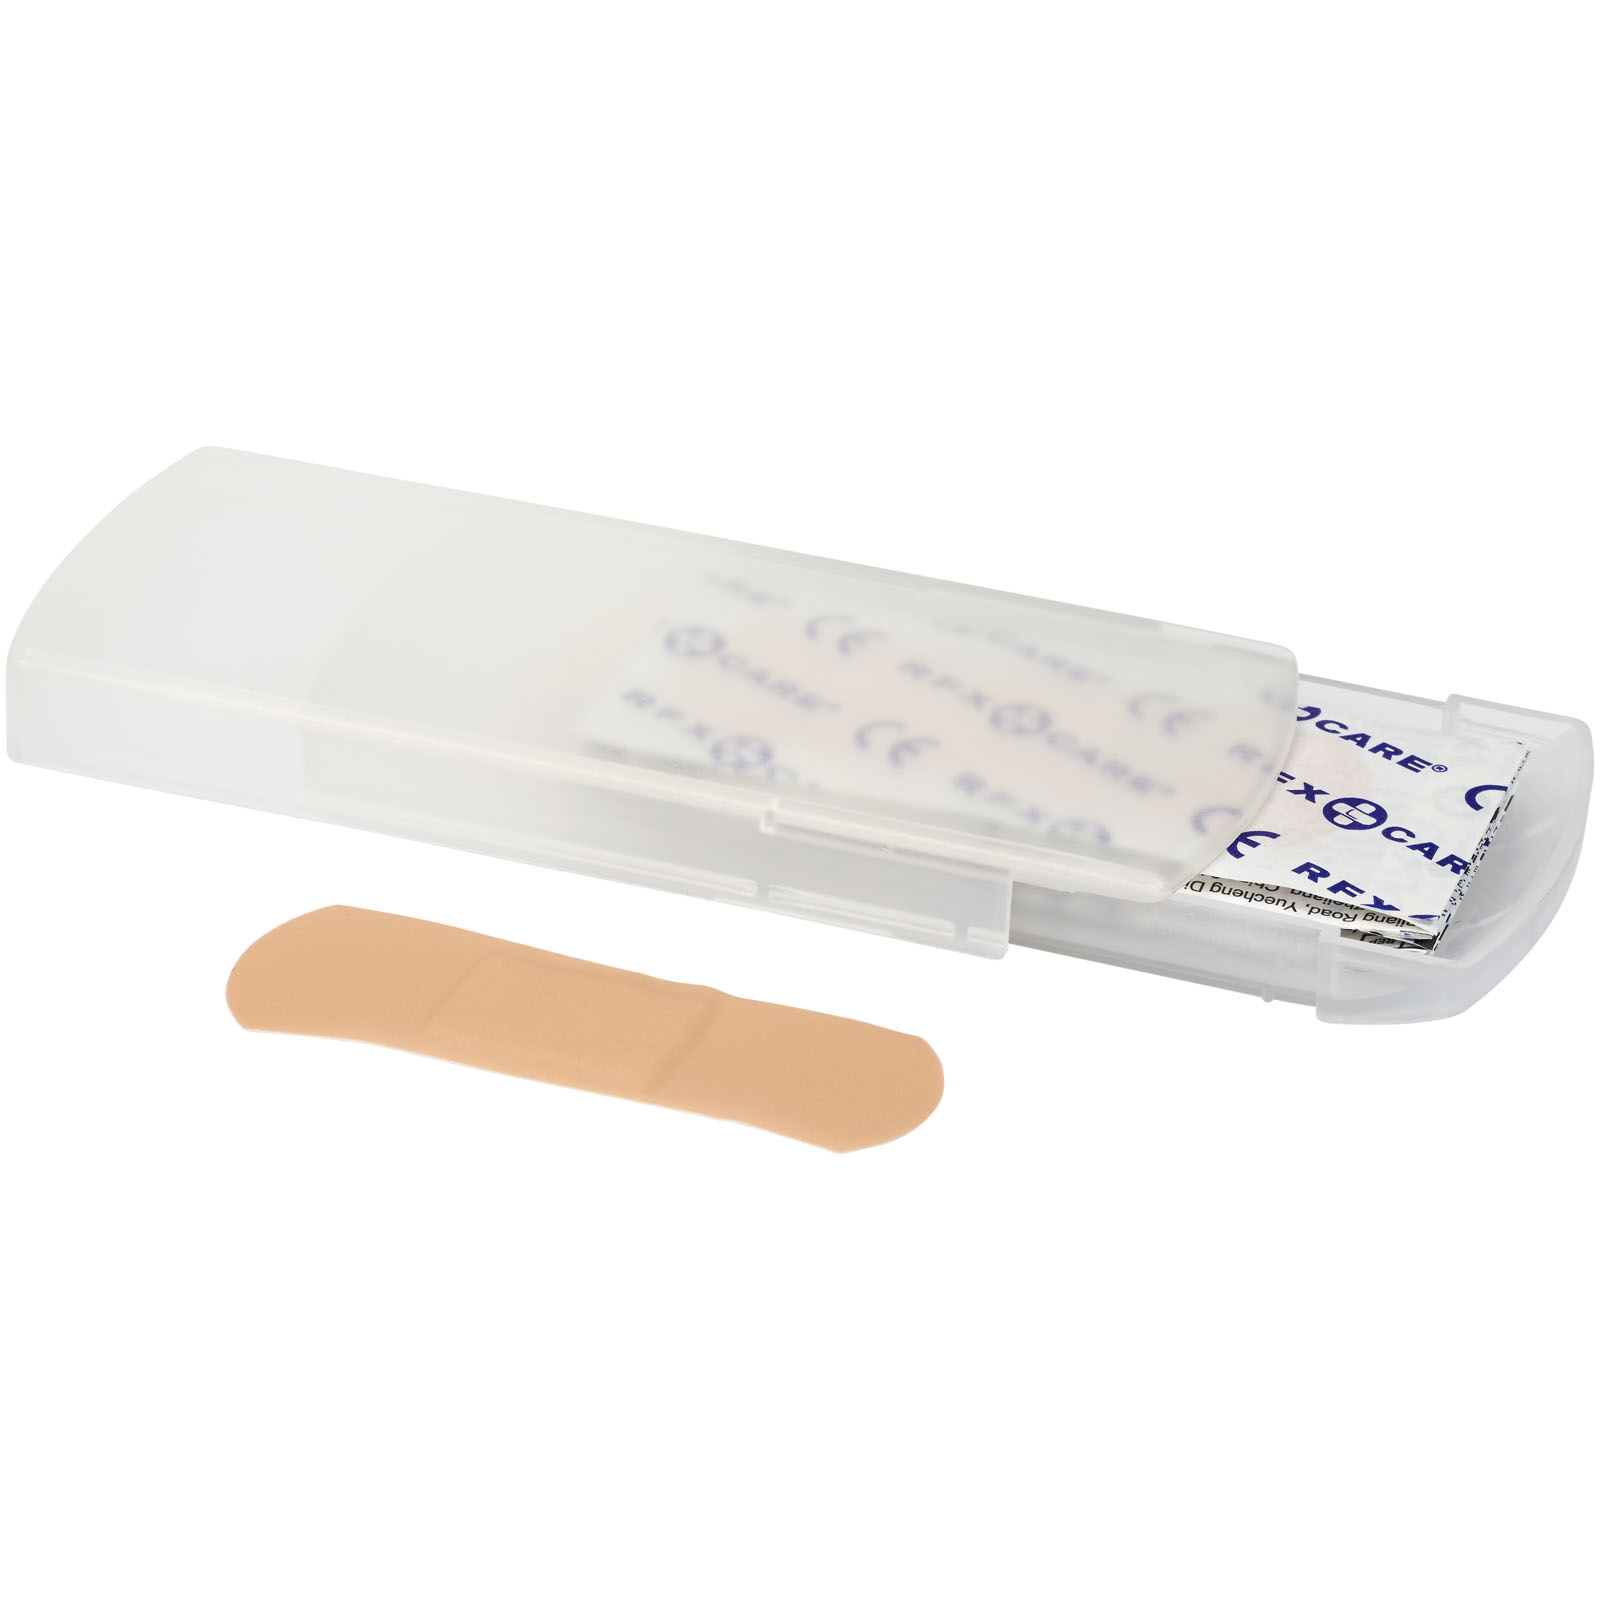 Small Portable Band-Aid Case - Llandudno Junction